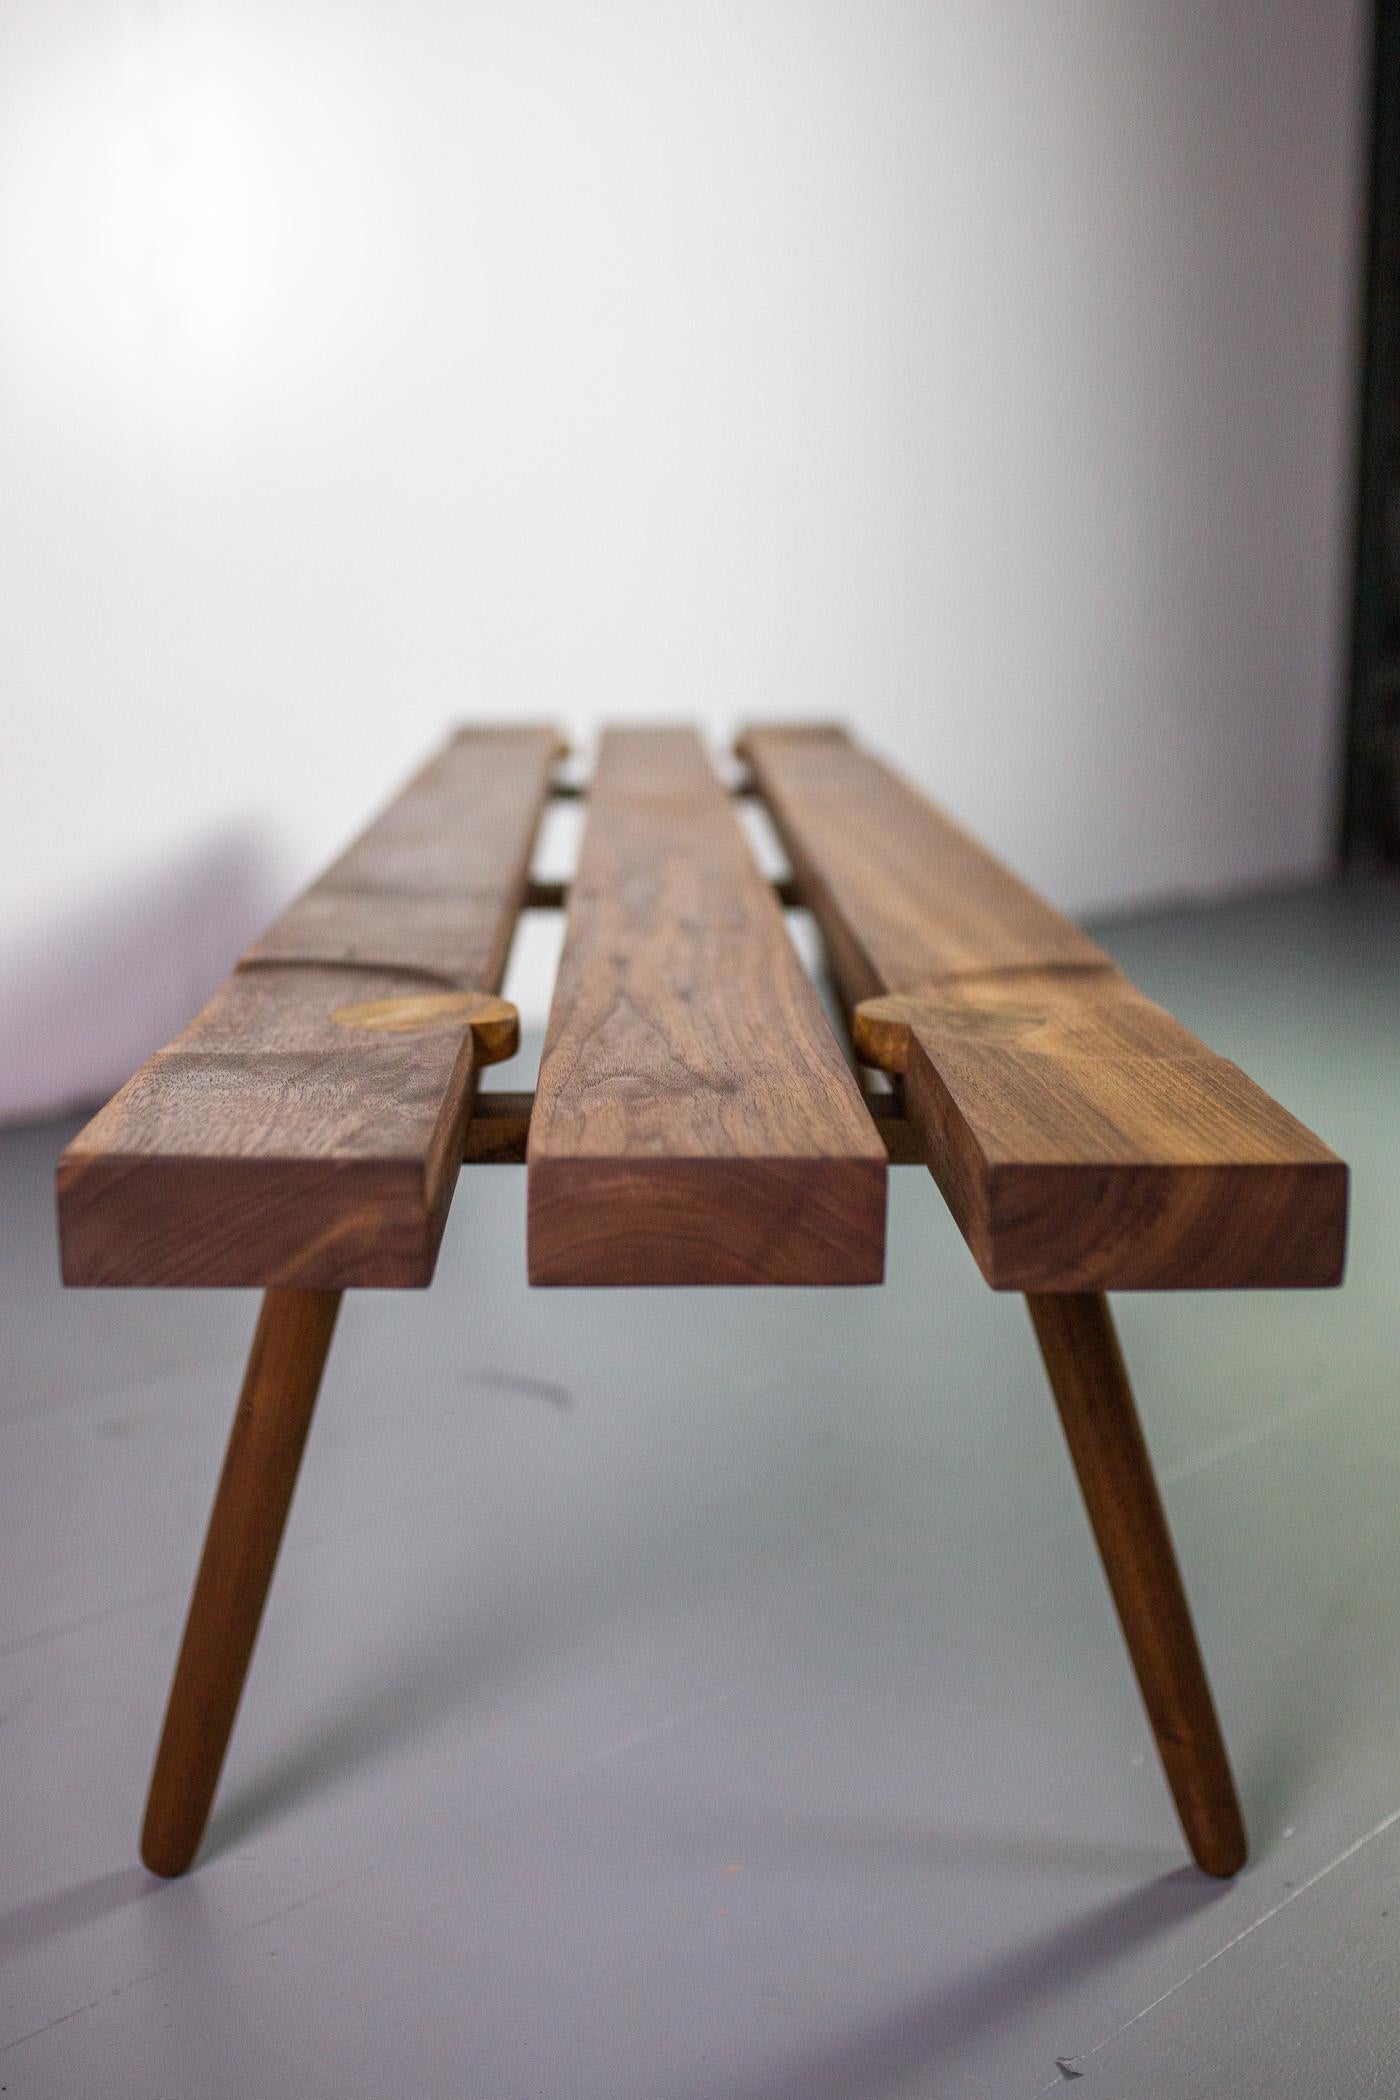 Studio Slat bench by Michael Rozell USA 2020 in walnut and white oak inlays.